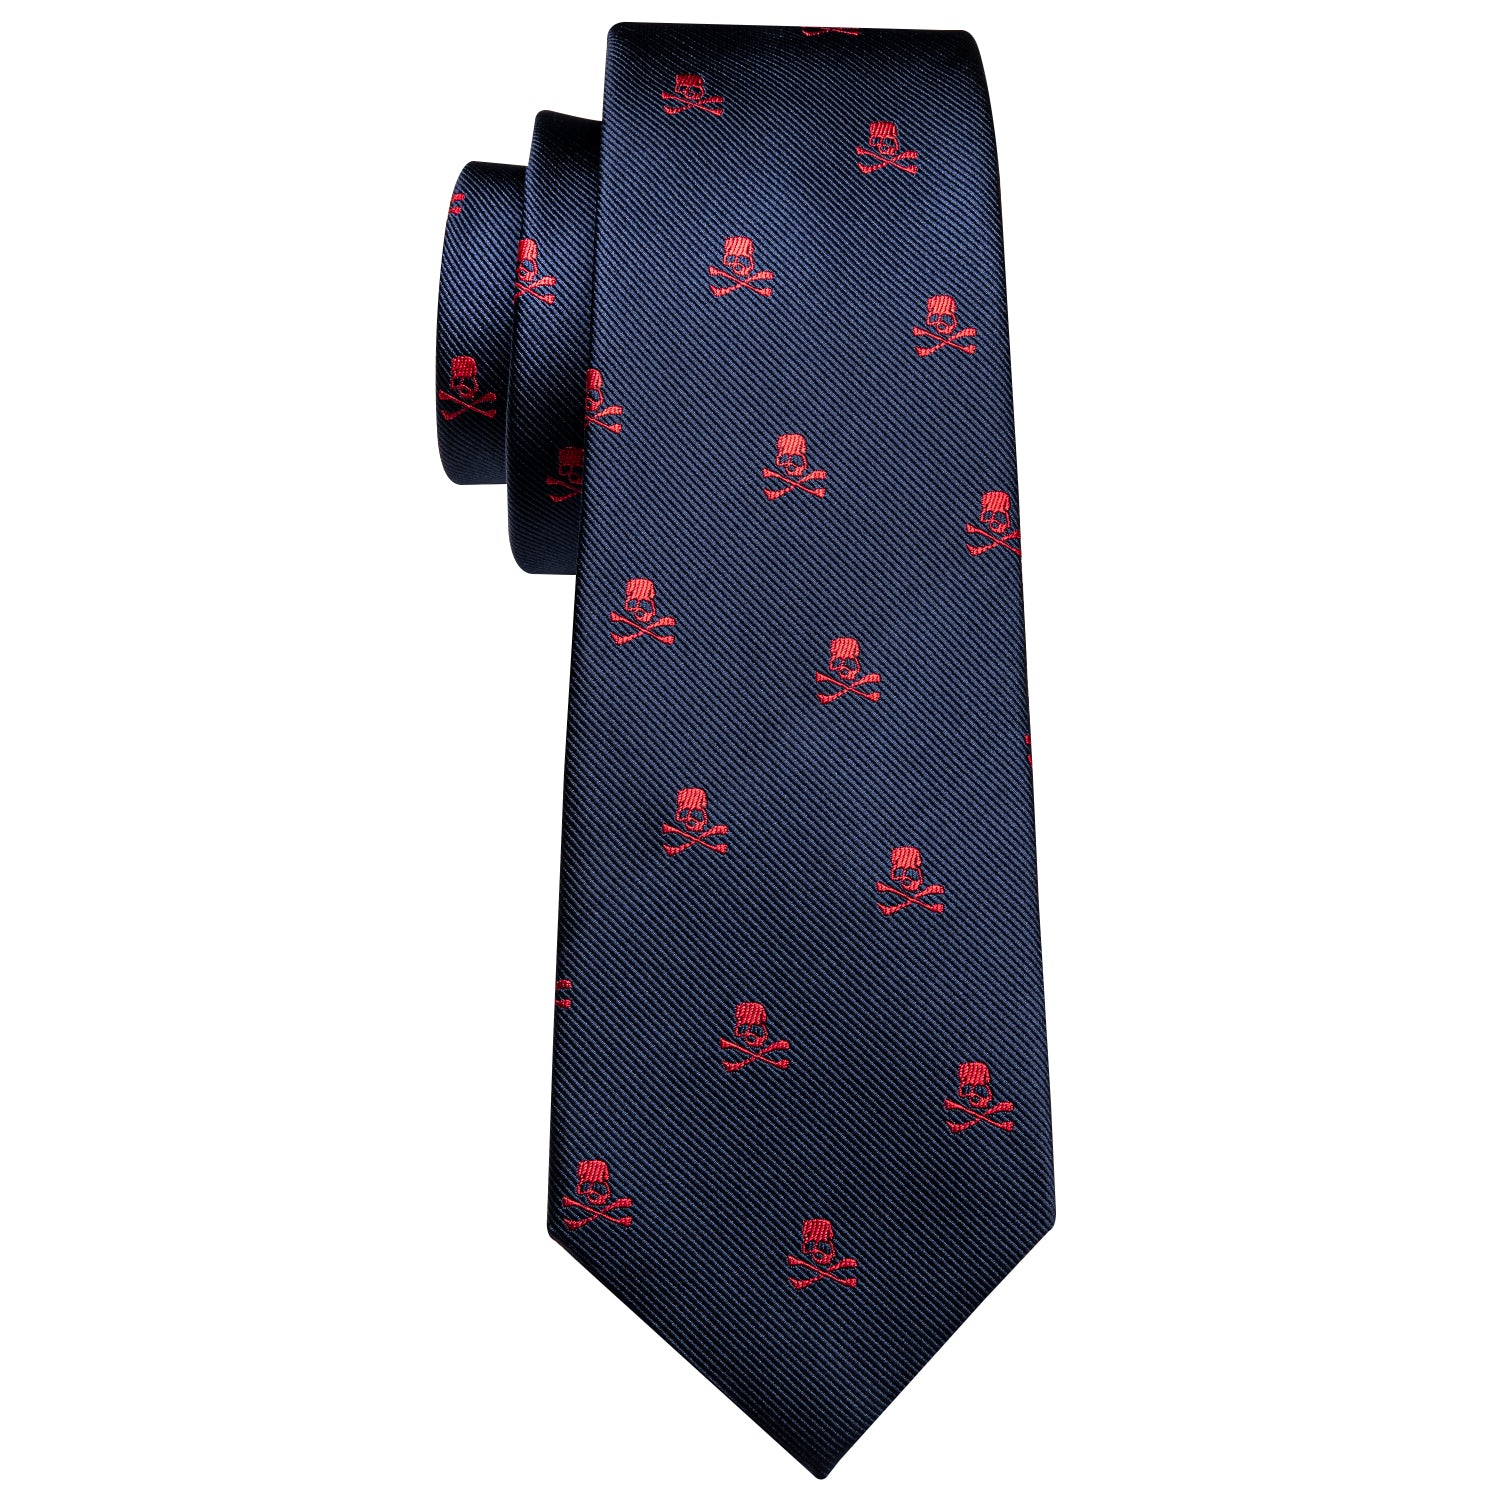 Novelty Red Skull Blue Tie Tie Hanky Cufflinks Set